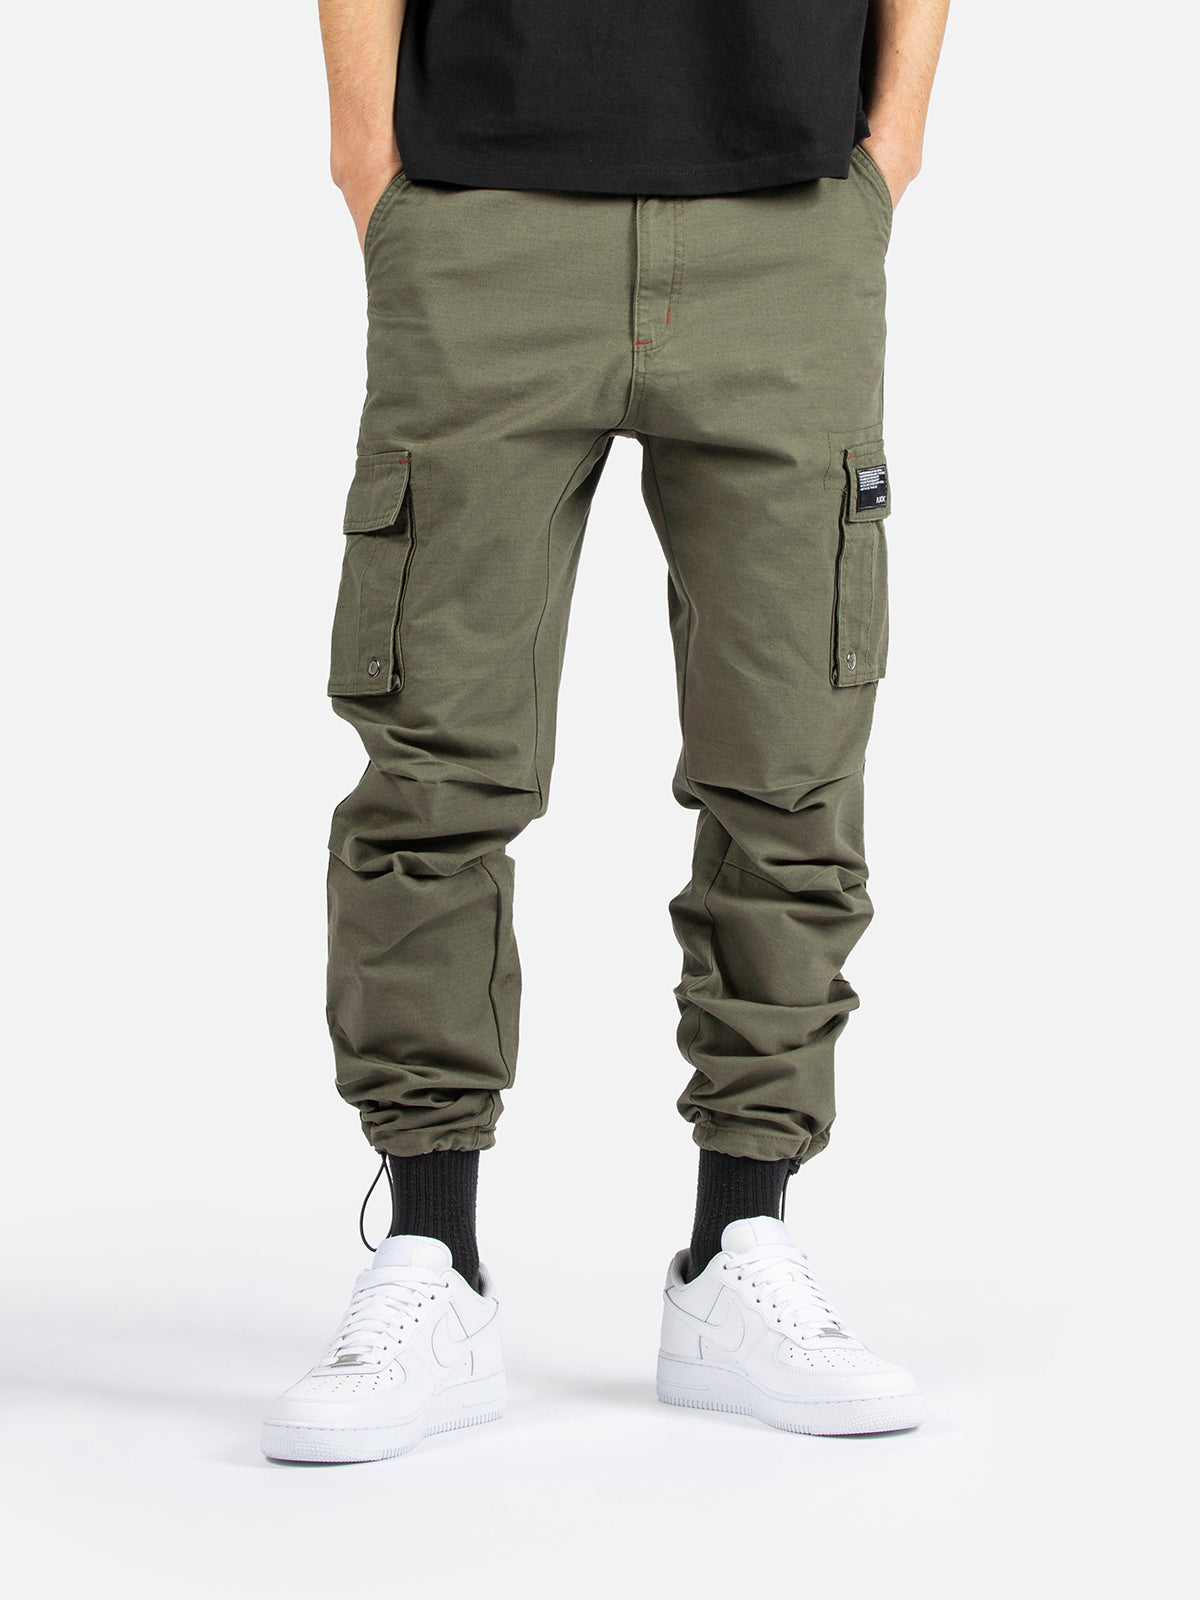 C9 | Blacktailor Pants – Cargo Green - BLACKTAILOR